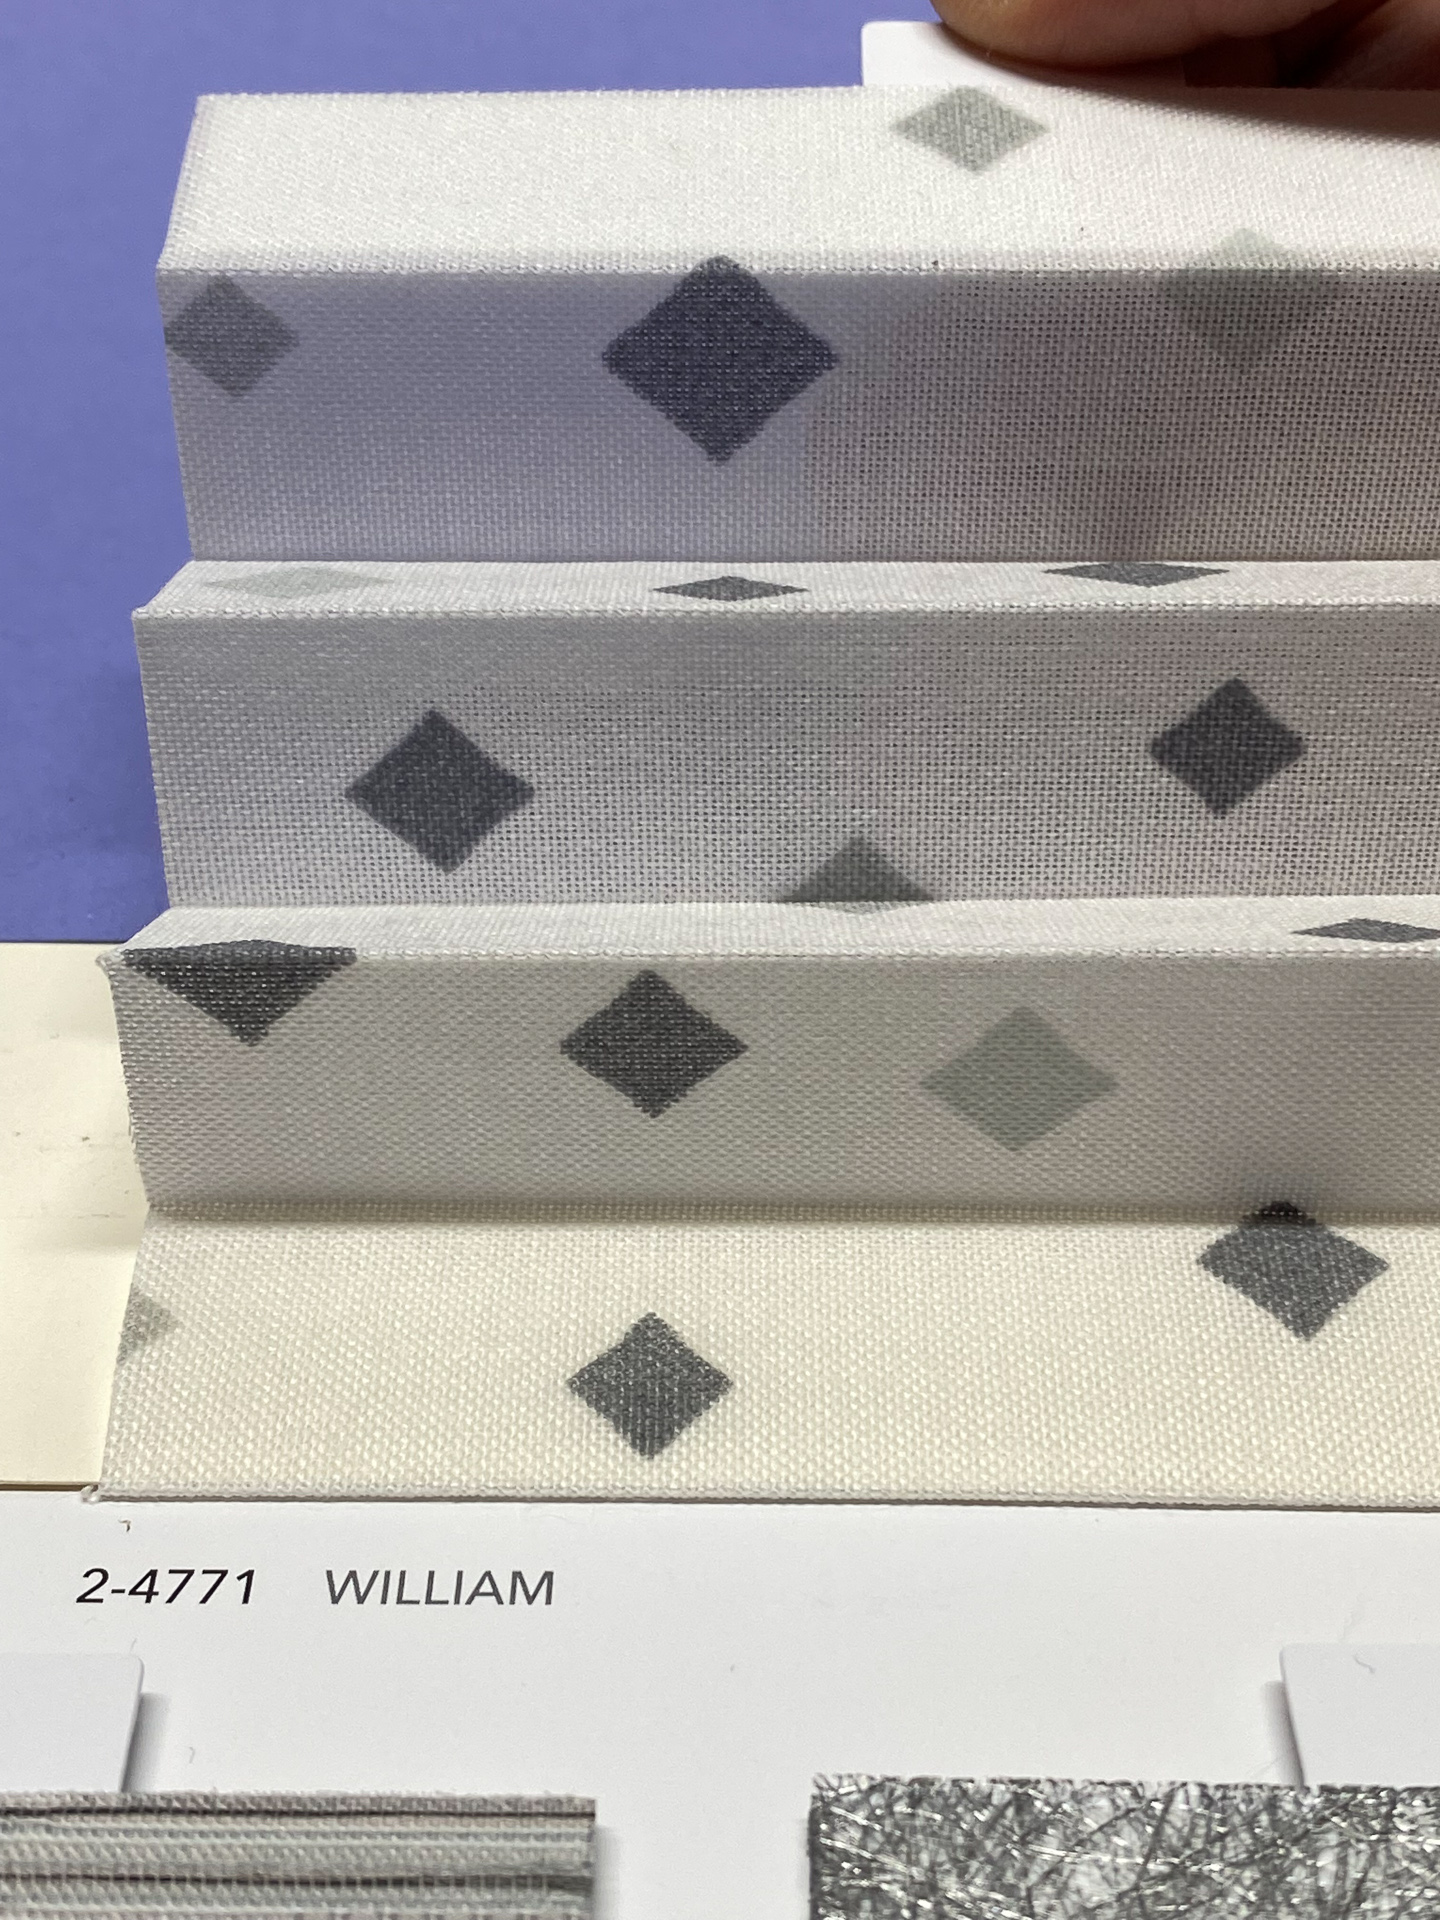 MHZ Plissee Stoff Muster aus der Farbkarte "10 Modern Grey" | Material: 100 % PES